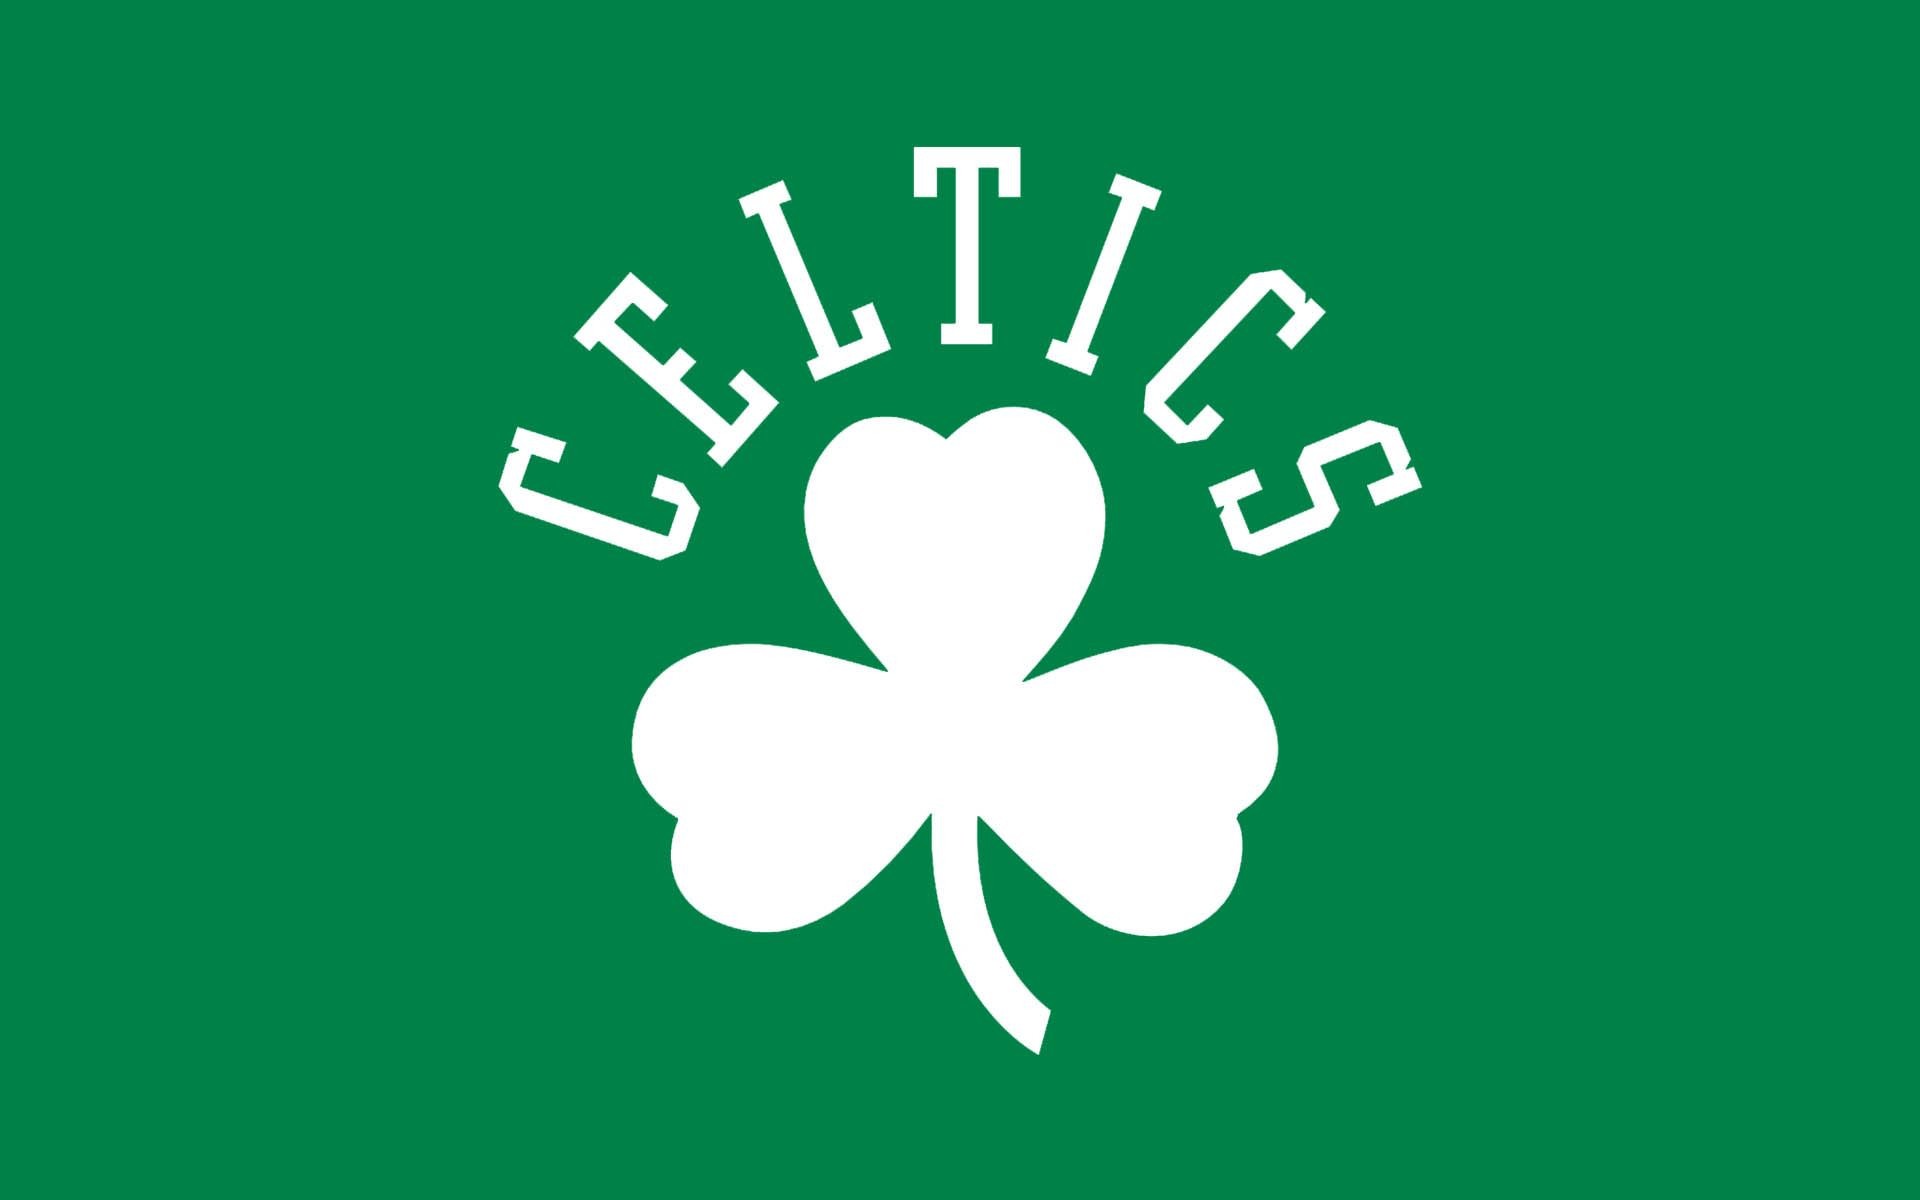 Celtics Desktop Wallpapers